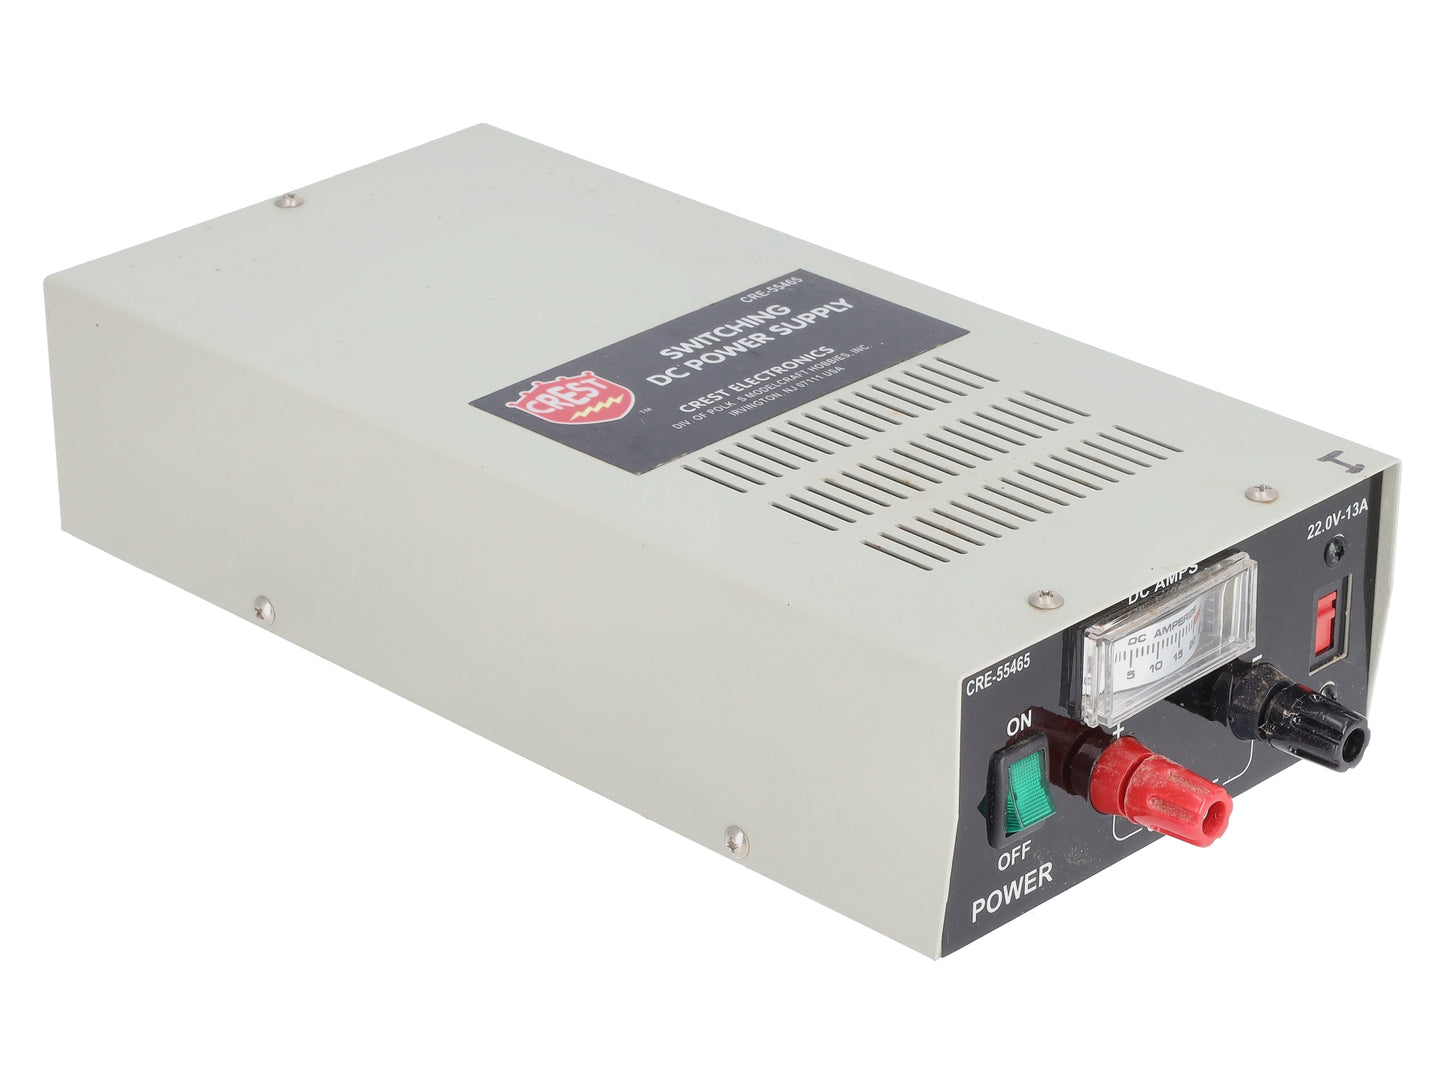 Crest 55465 Switching Power Supply VG/Box